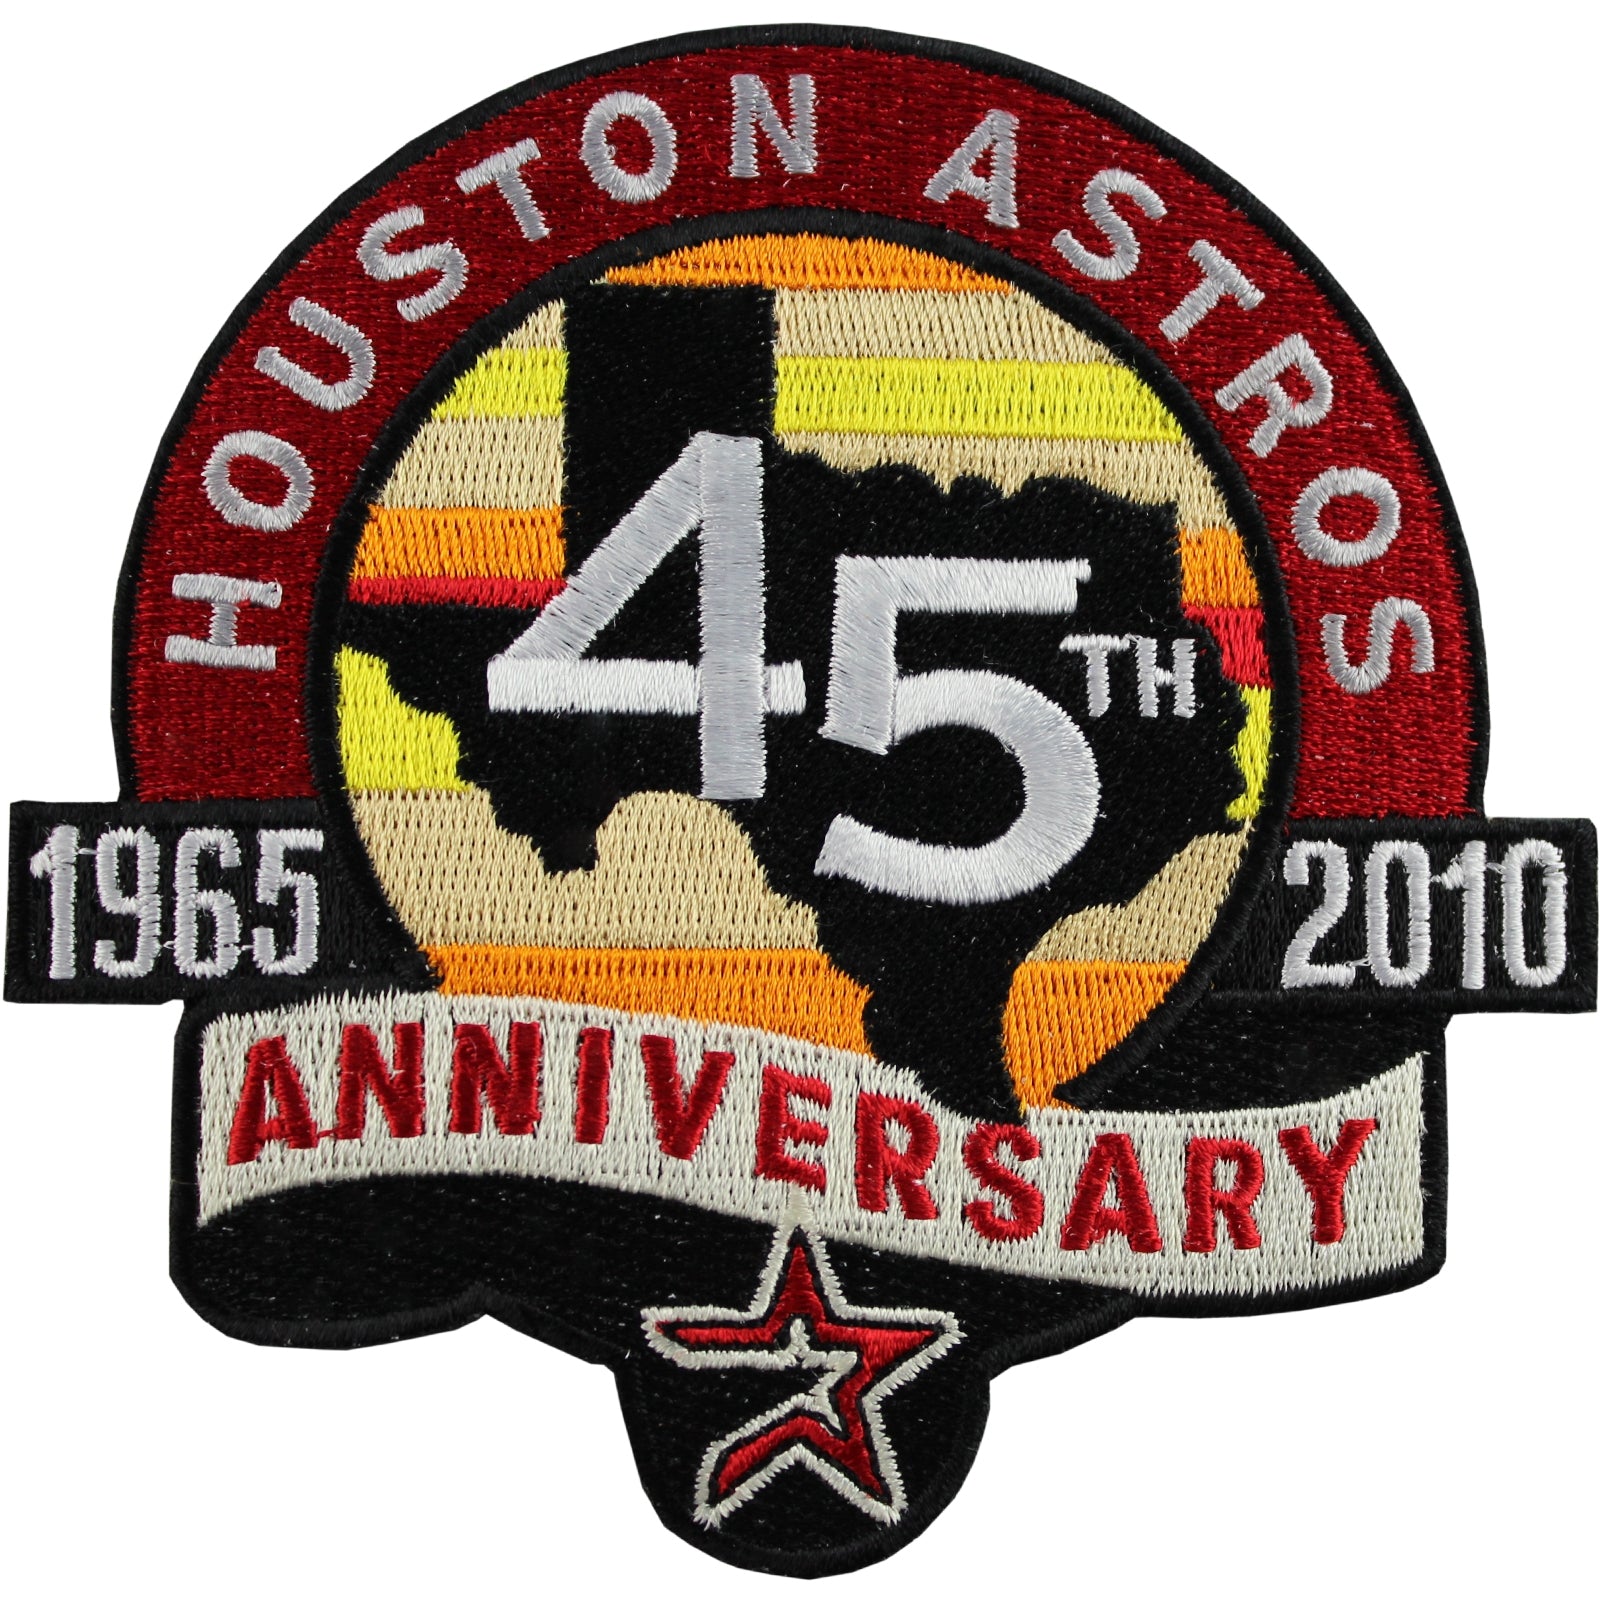 Houston Astros 45TH ANNIVERSARY MESH-BACK SIDE-PATCH Black-Orange